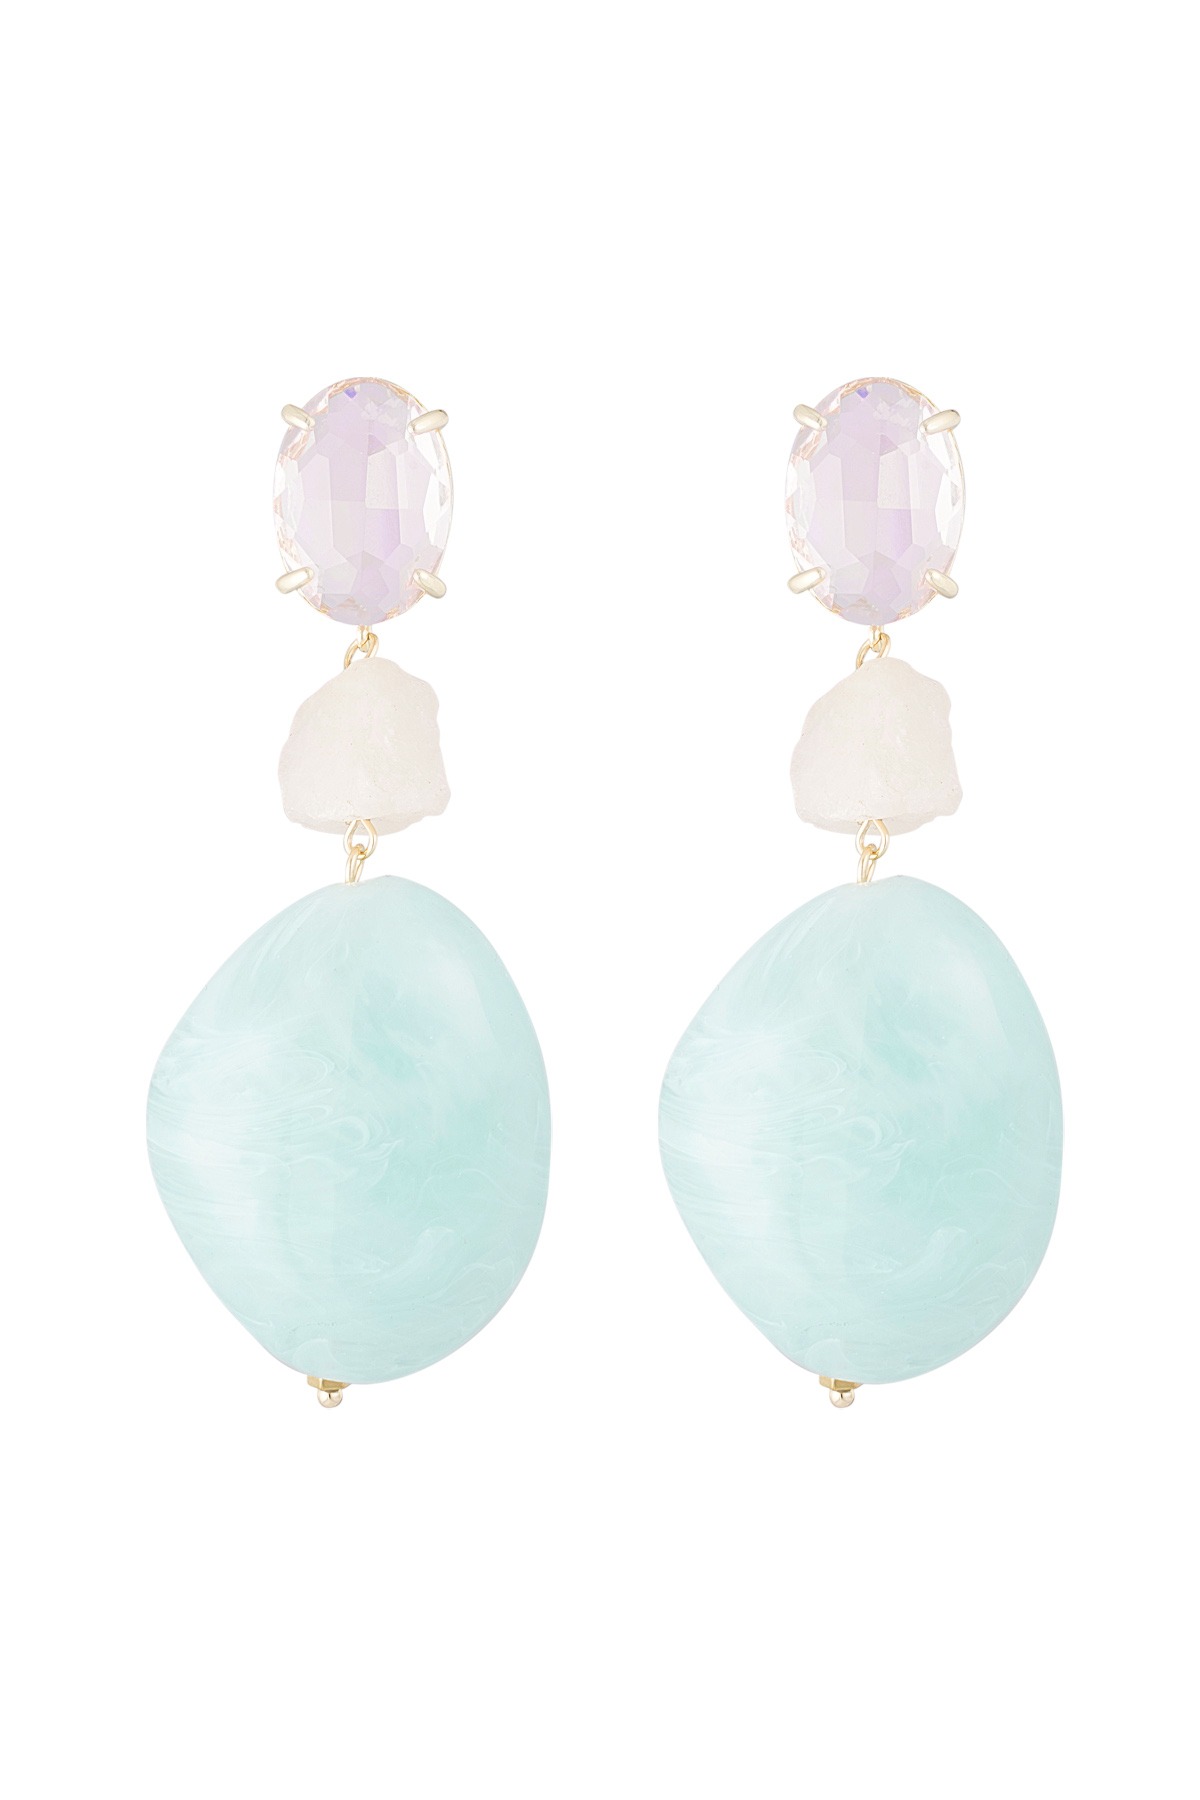 Statement glass earrings - blue/pink 